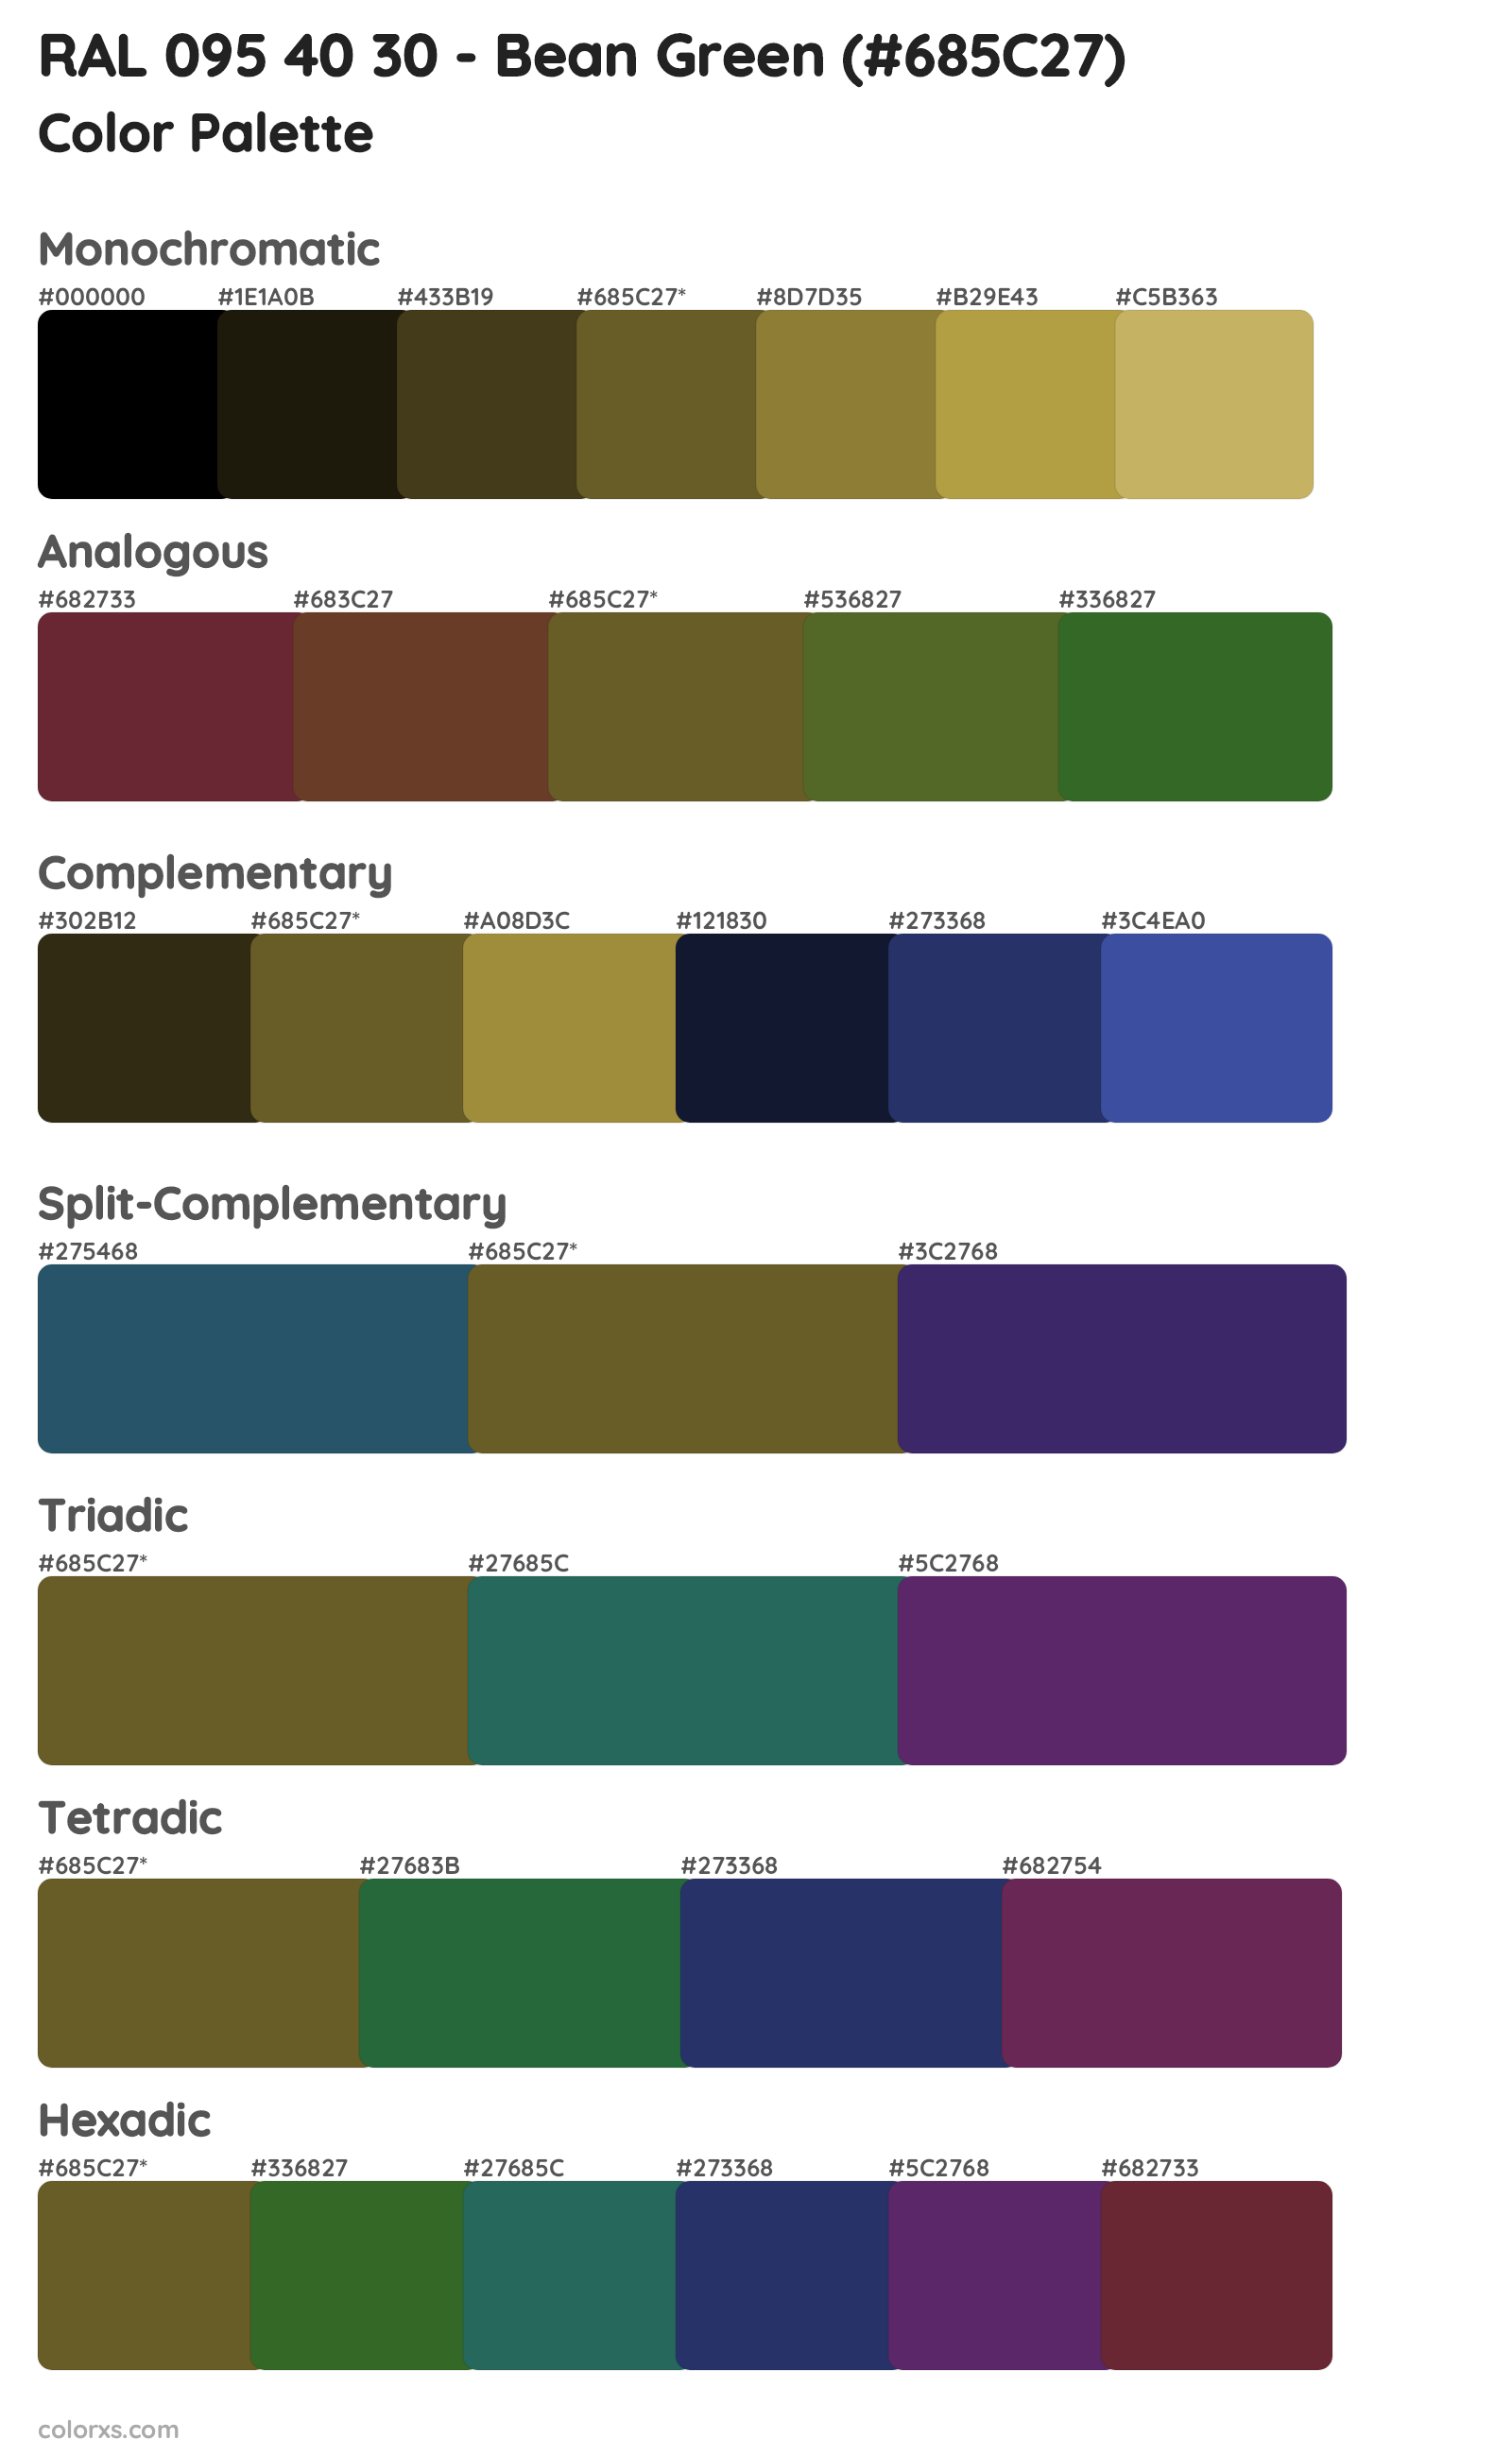 RAL 095 40 30 - Bean Green Color Scheme Palettes